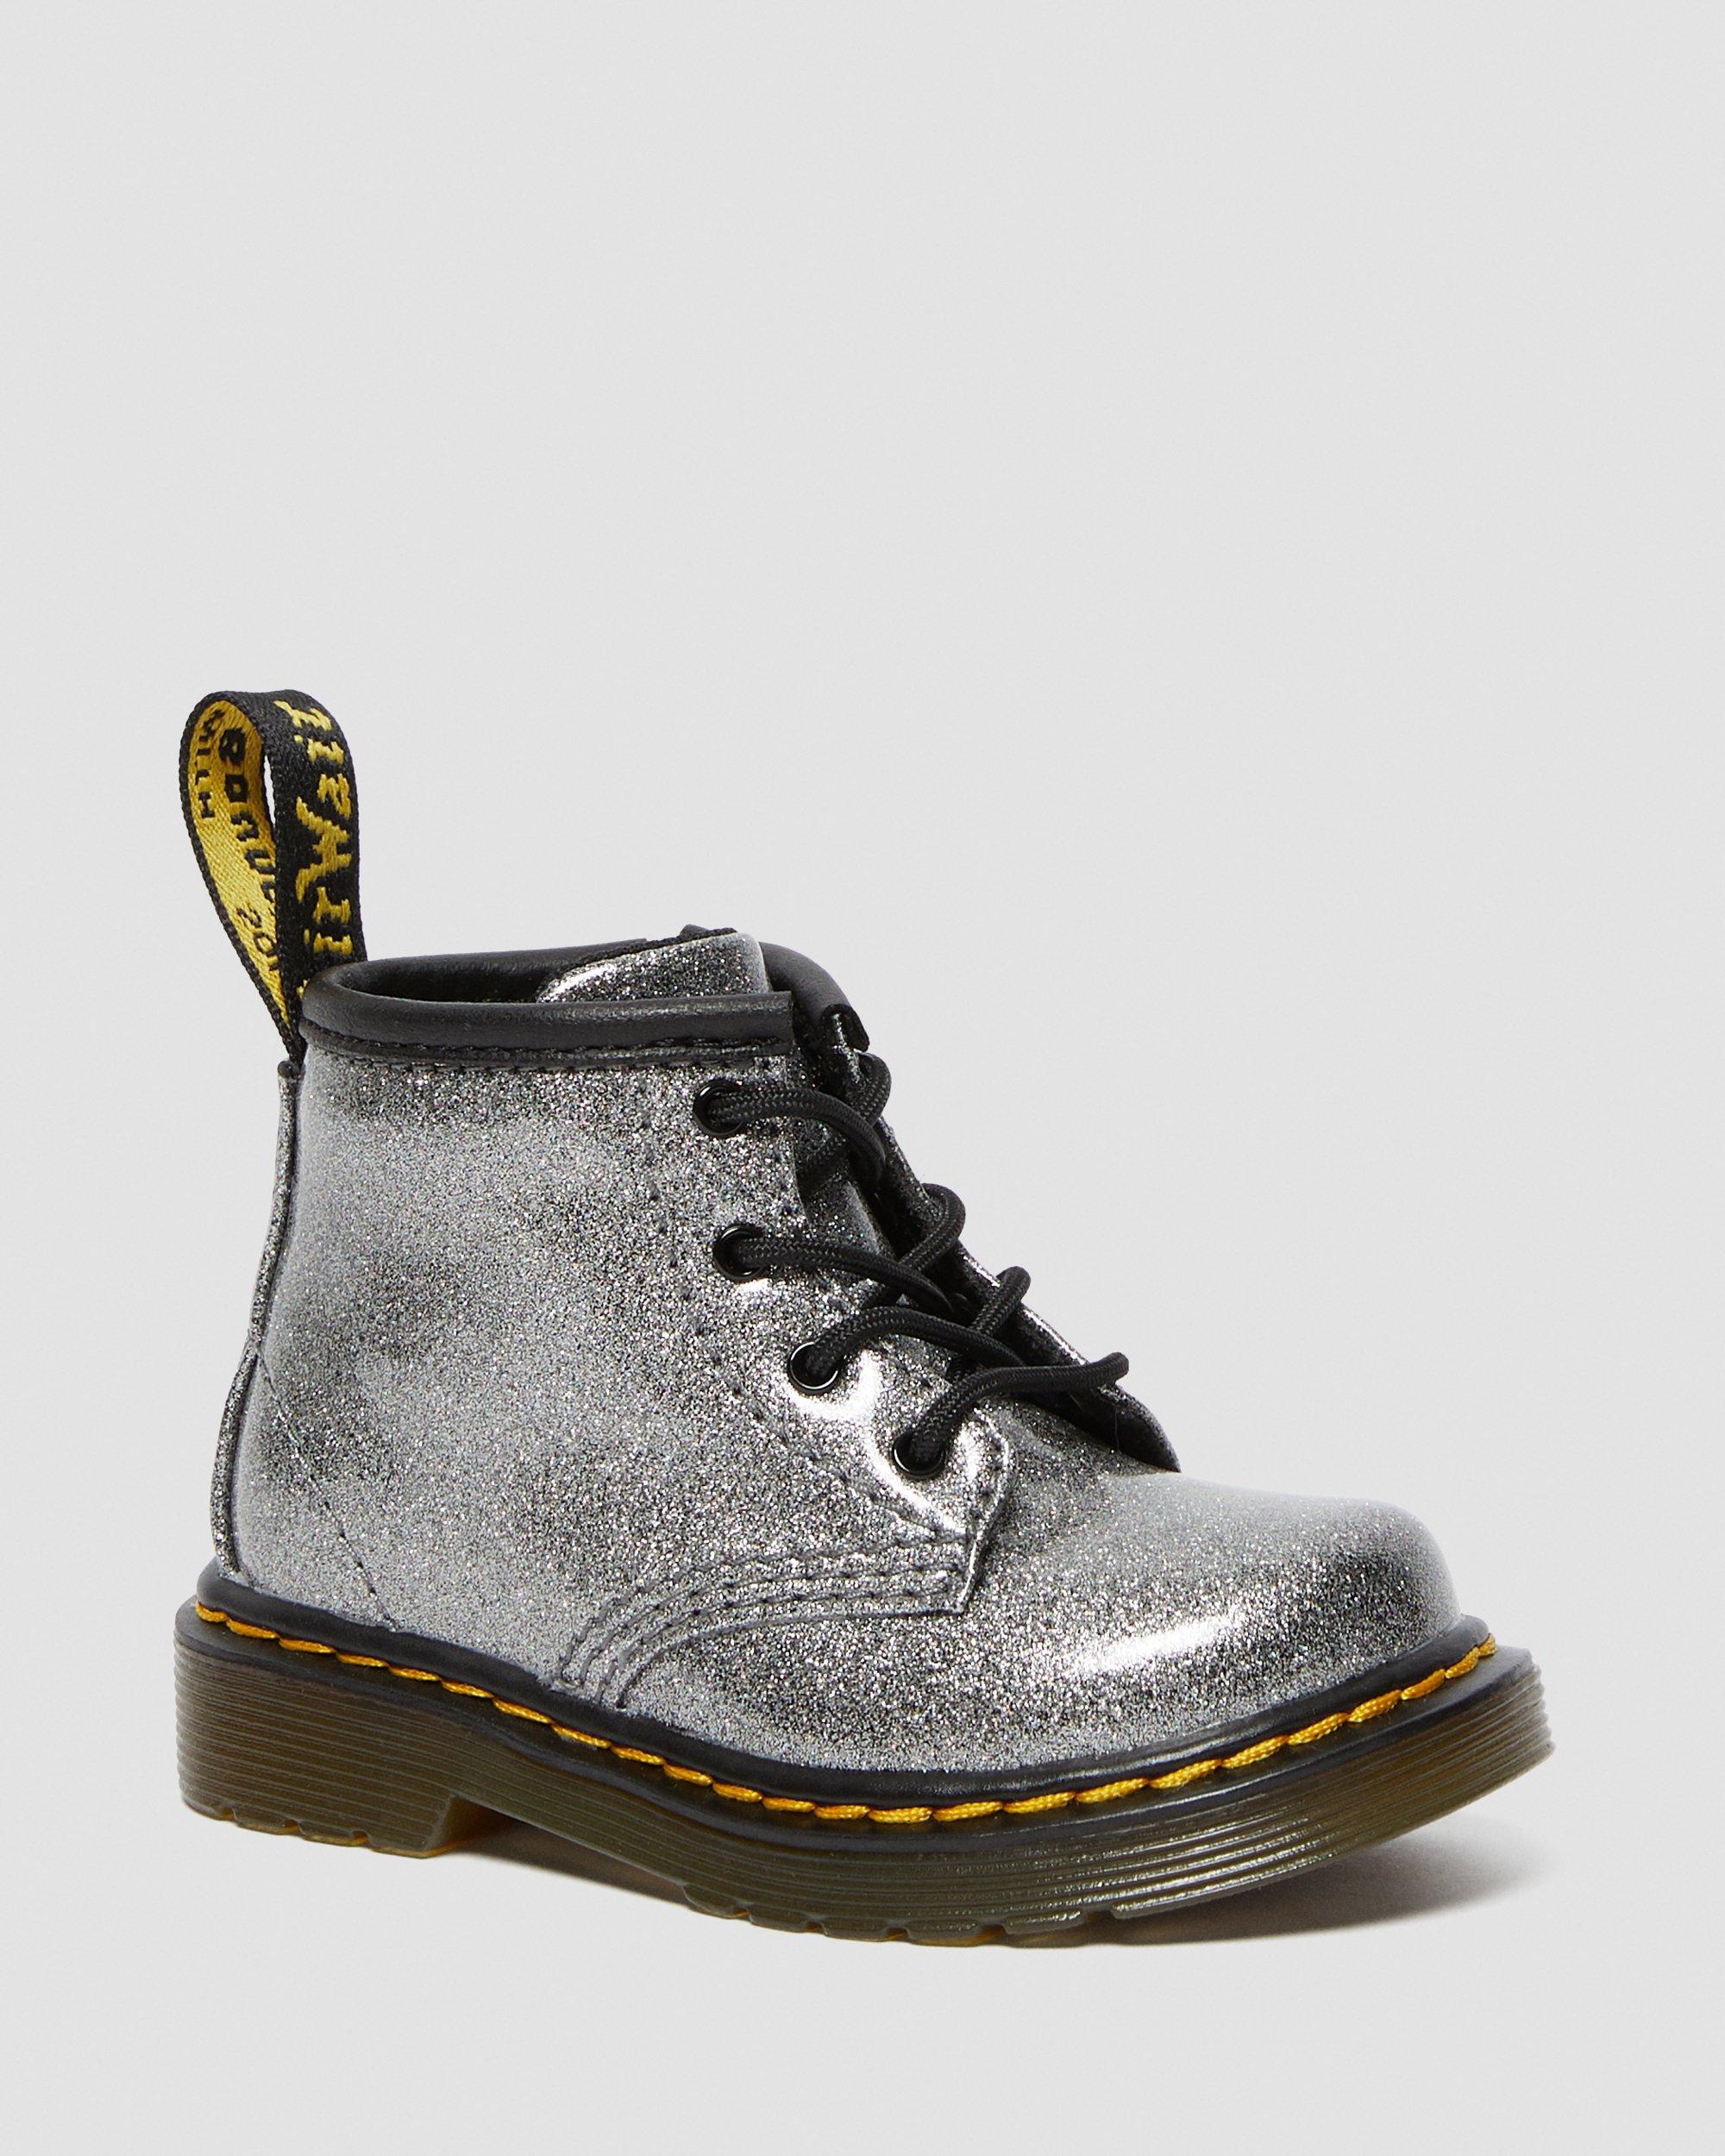 glitter doc marten style boots